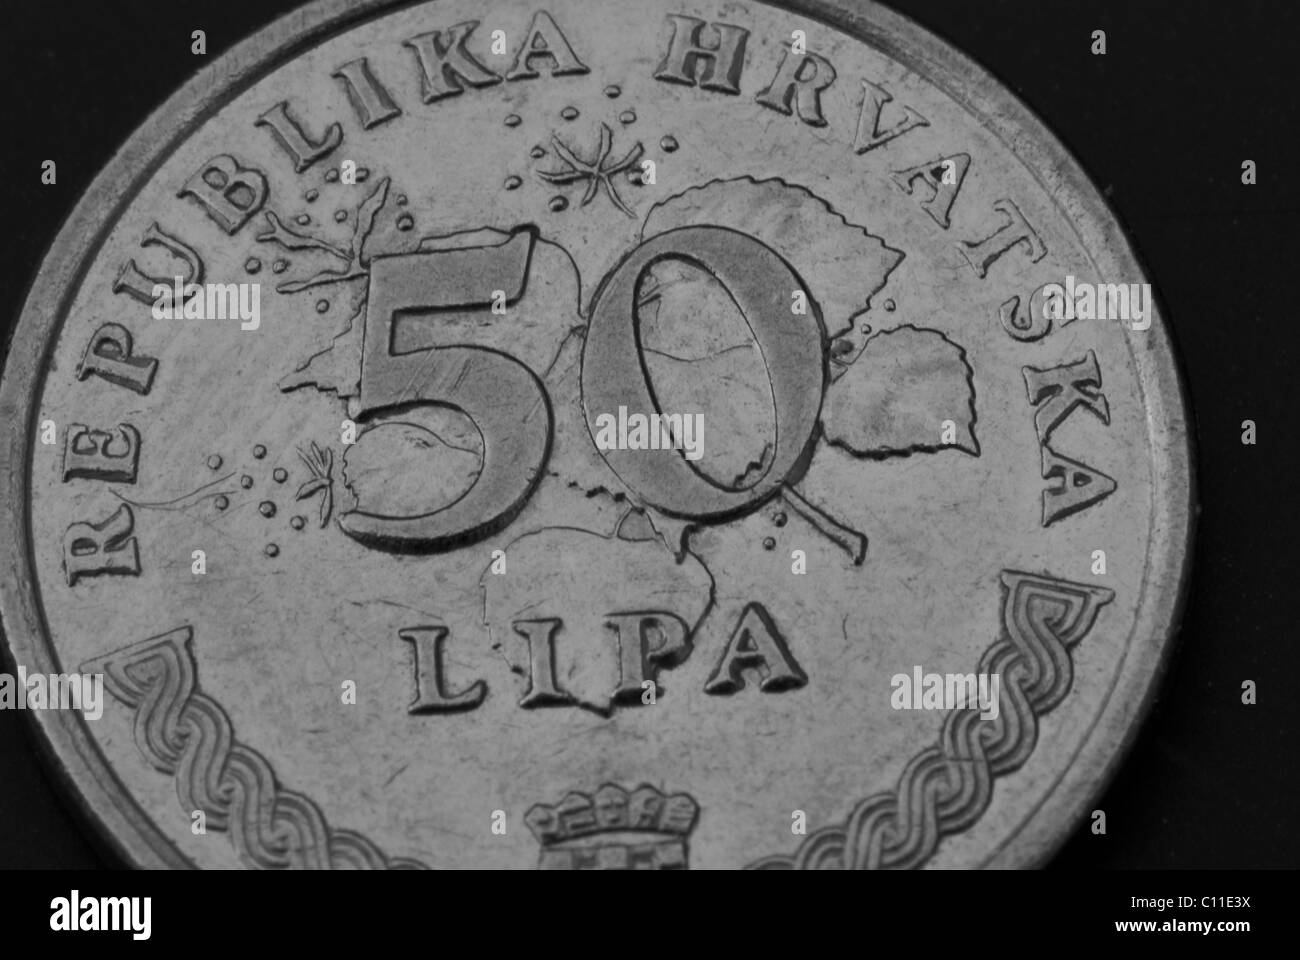 Hrvatska Croatia Coin Macro Close-Up Money Stock Photo